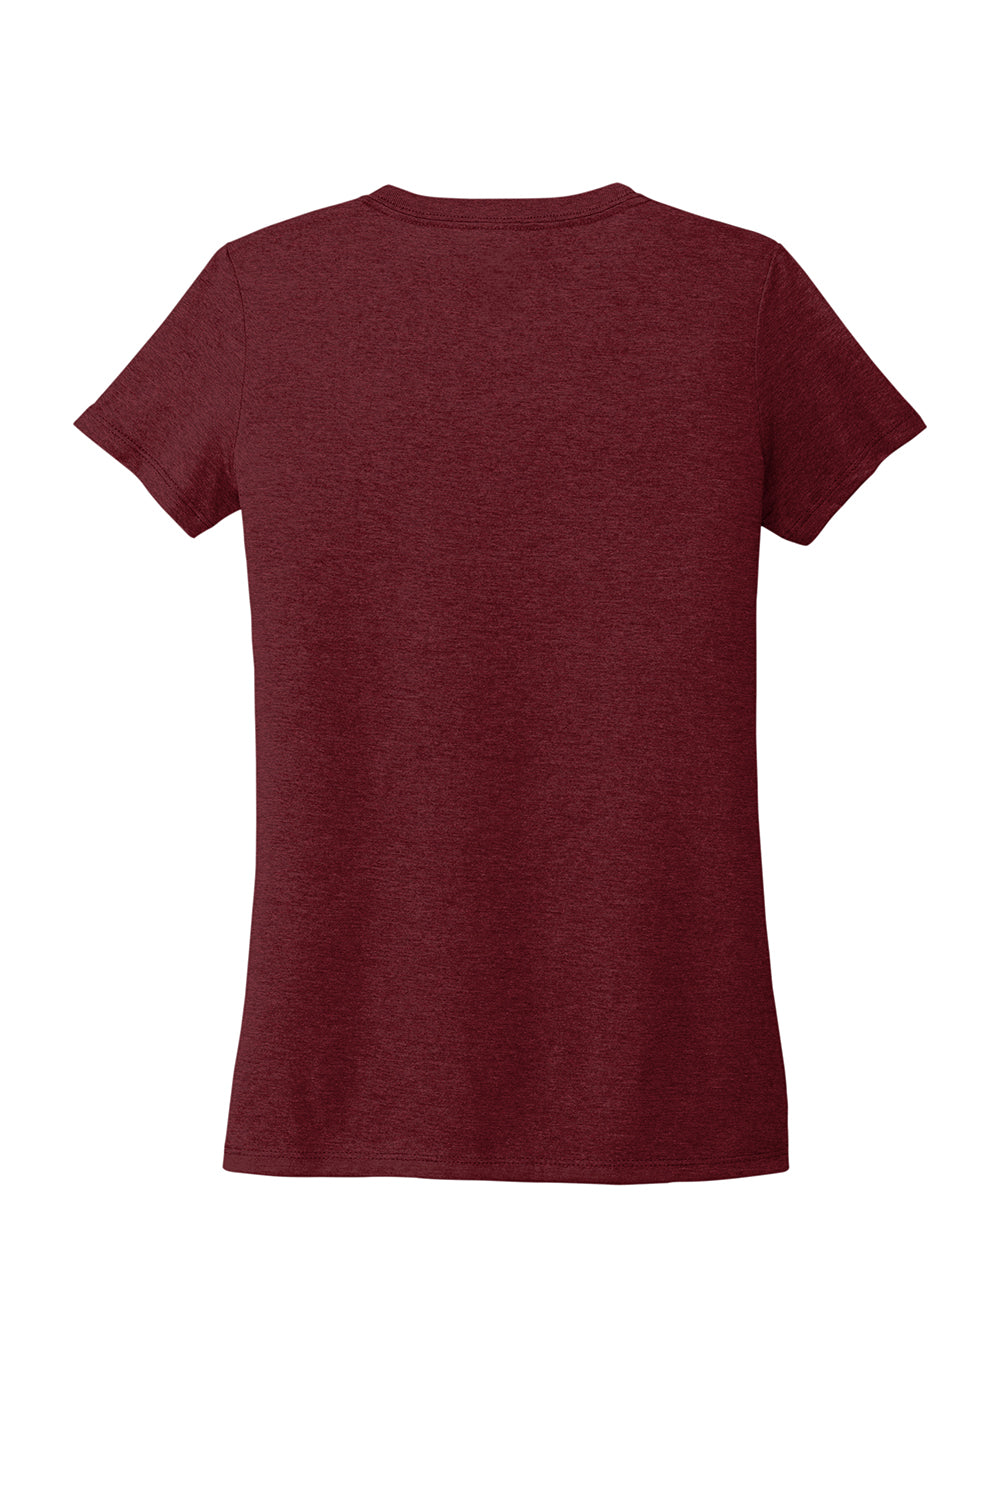 Allmade AL2018 Womens Short Sleeve V-Neck T-Shirt Vino Red Flat Back